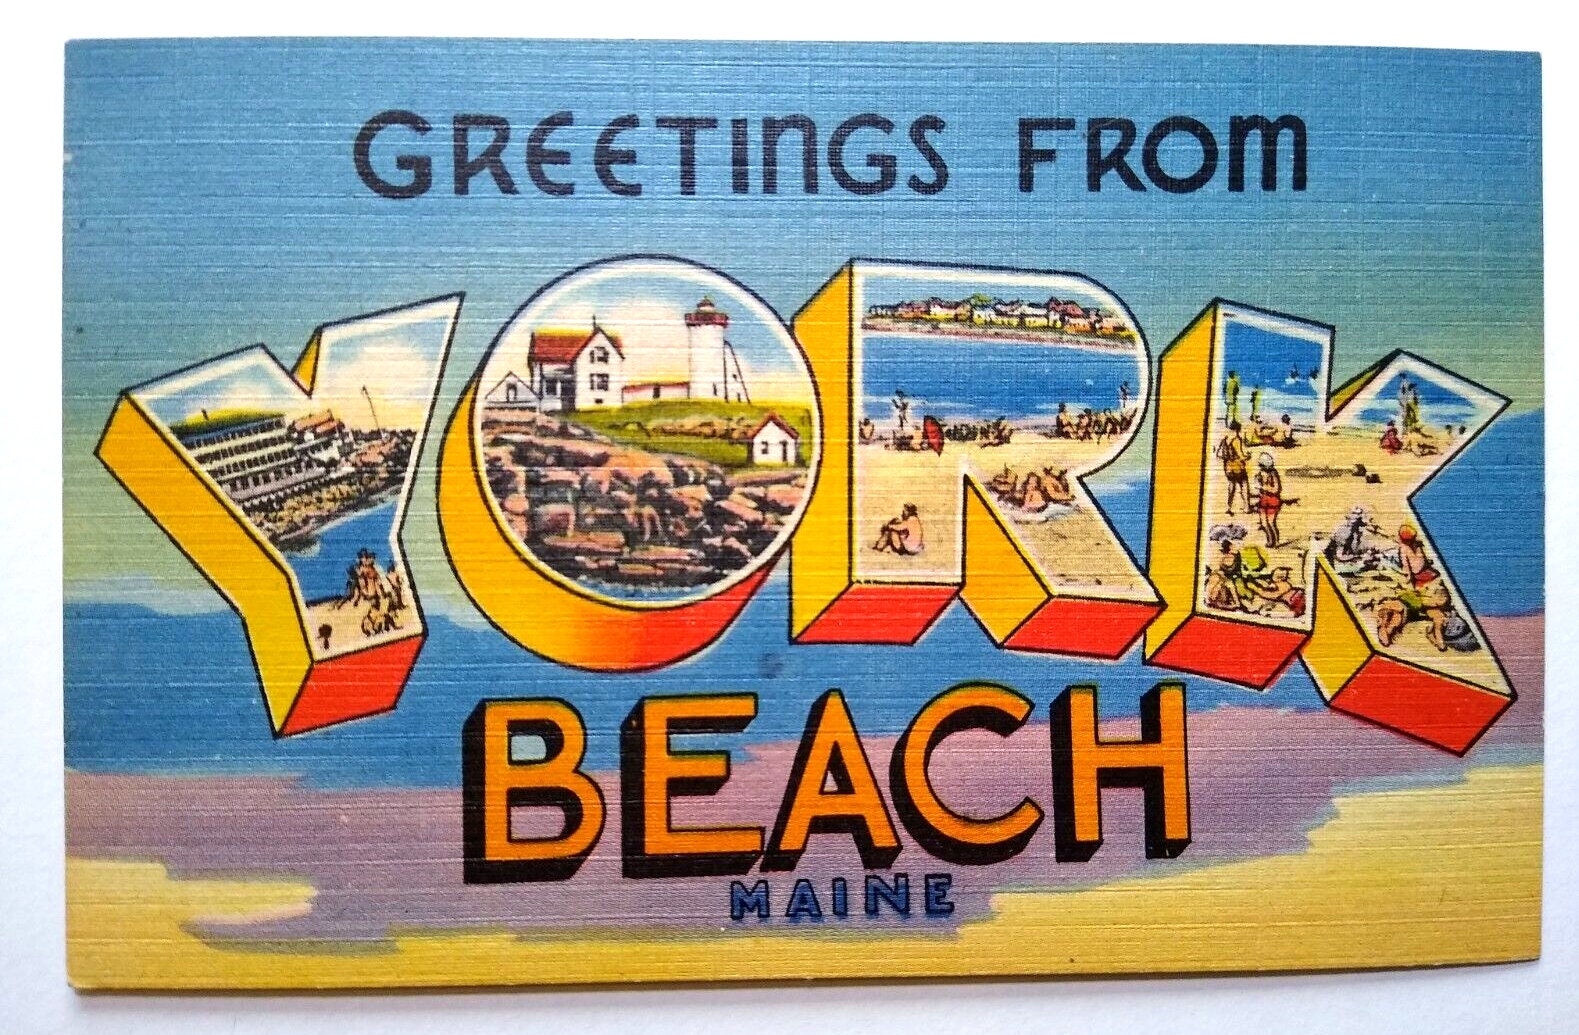 Miami Beach, FL, postcard folder. Linen, c.1940s. 16 images. Florida.